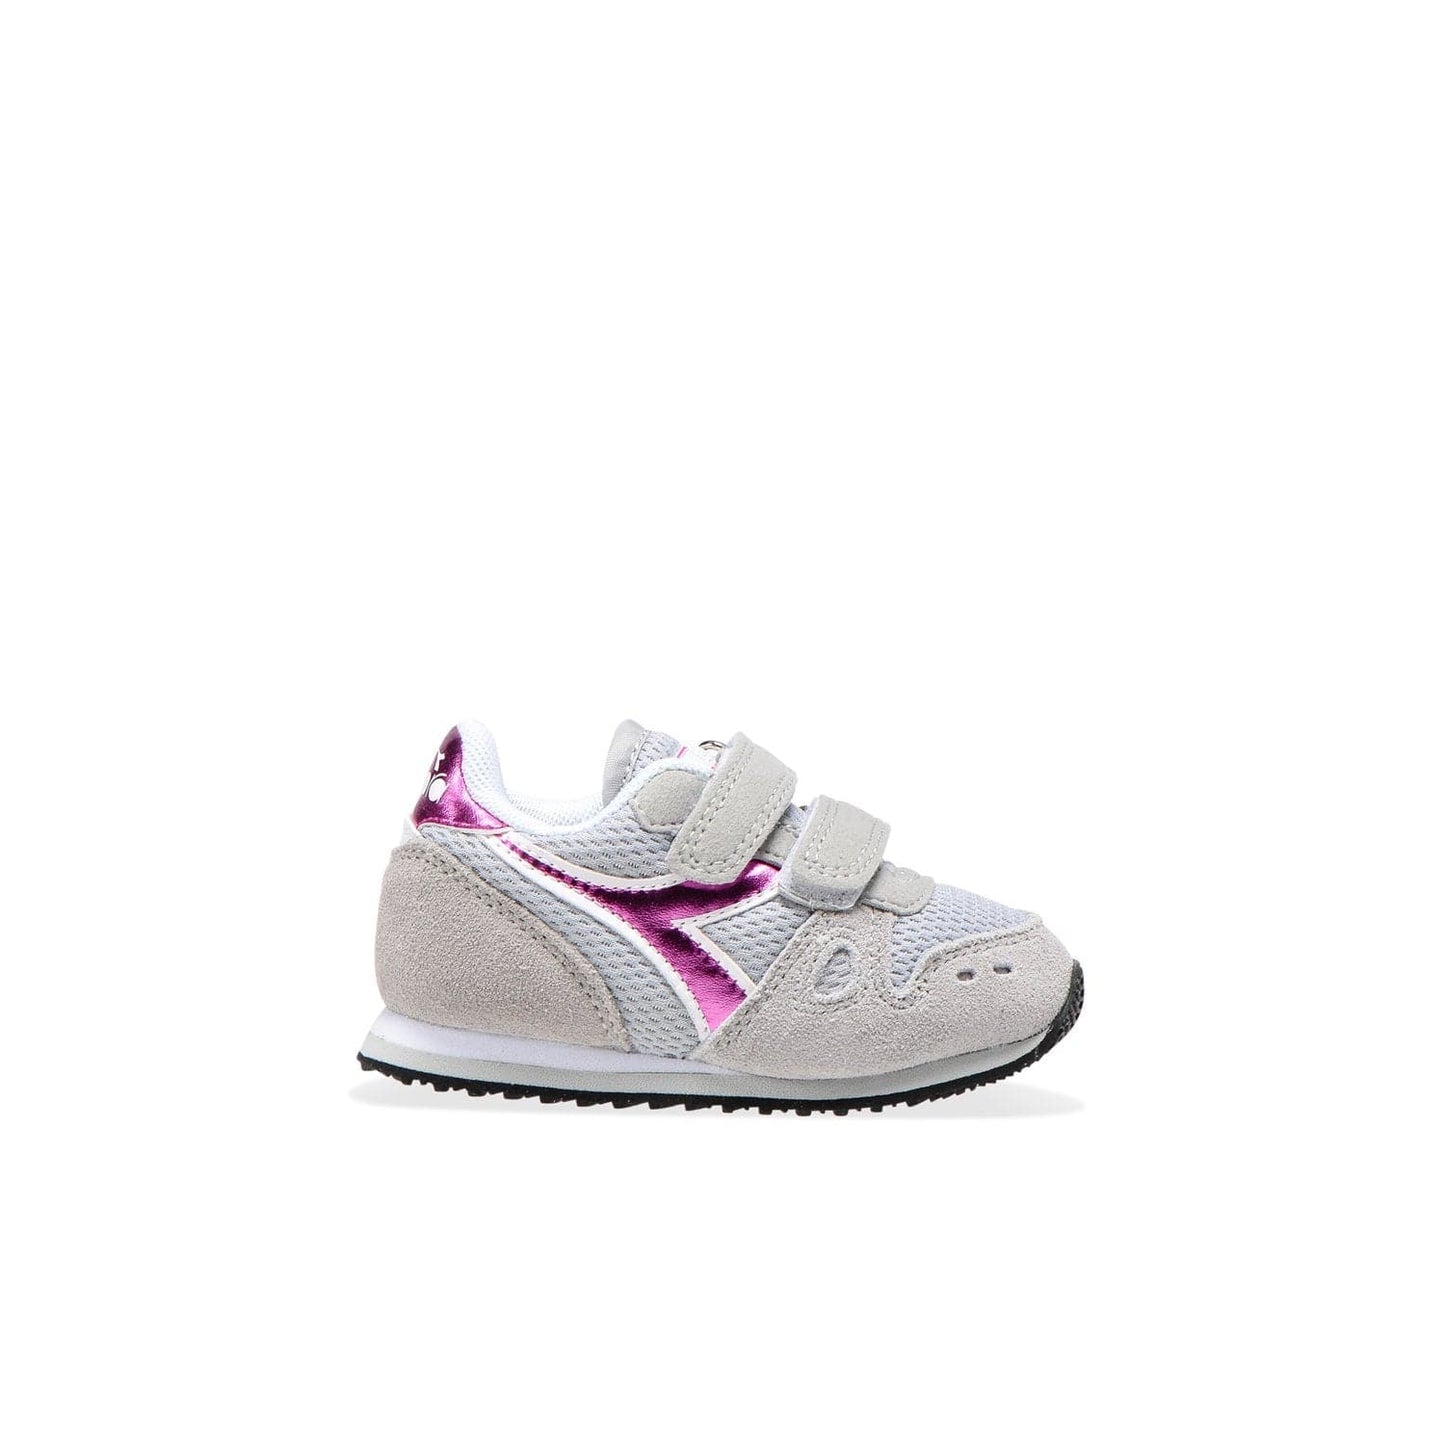 Diadora simple run td girl - La Scarpa Shoes